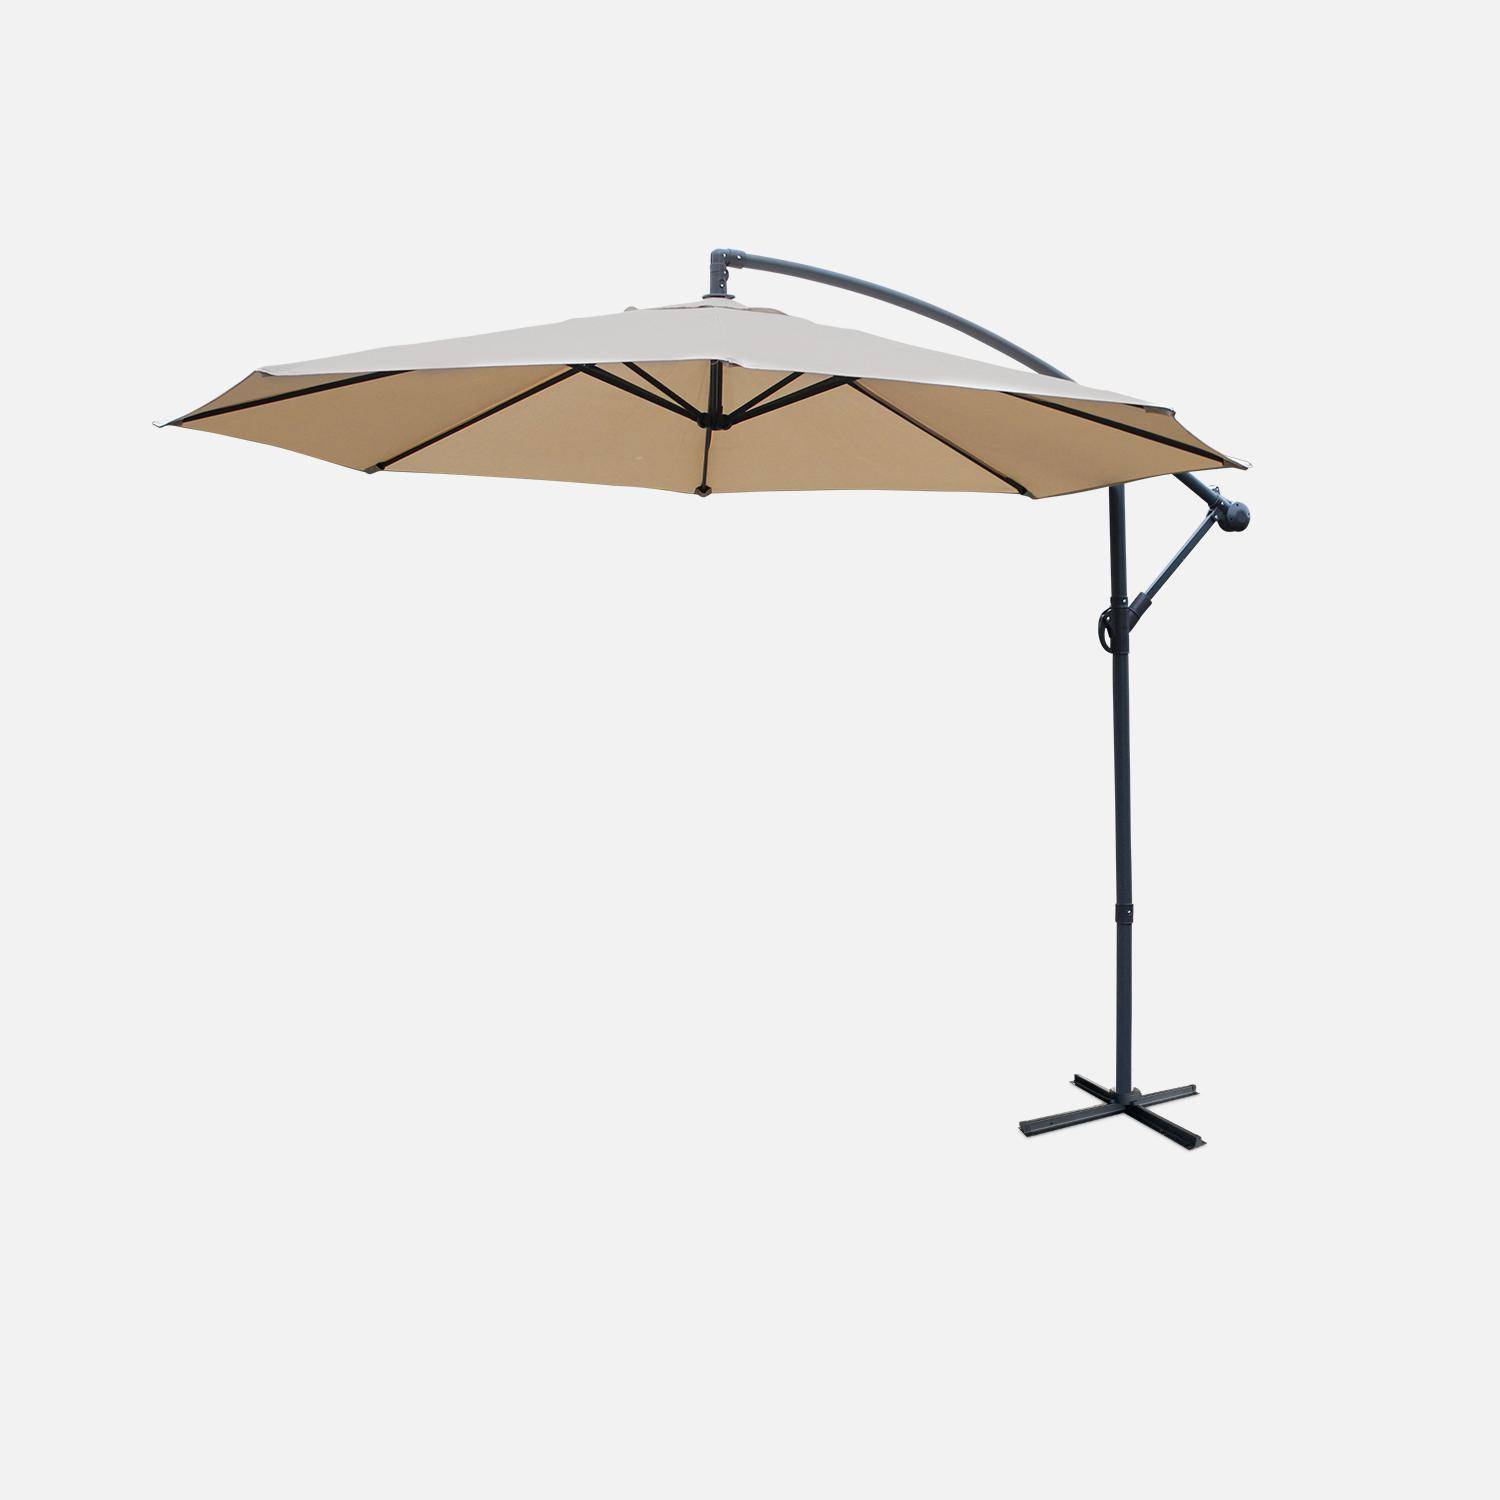 Paraguas redondo 3x3m - Hardelot - Beige - Manivela antirretorno | Tejido impermeable | Fácil de usar,sweeek,Photo2